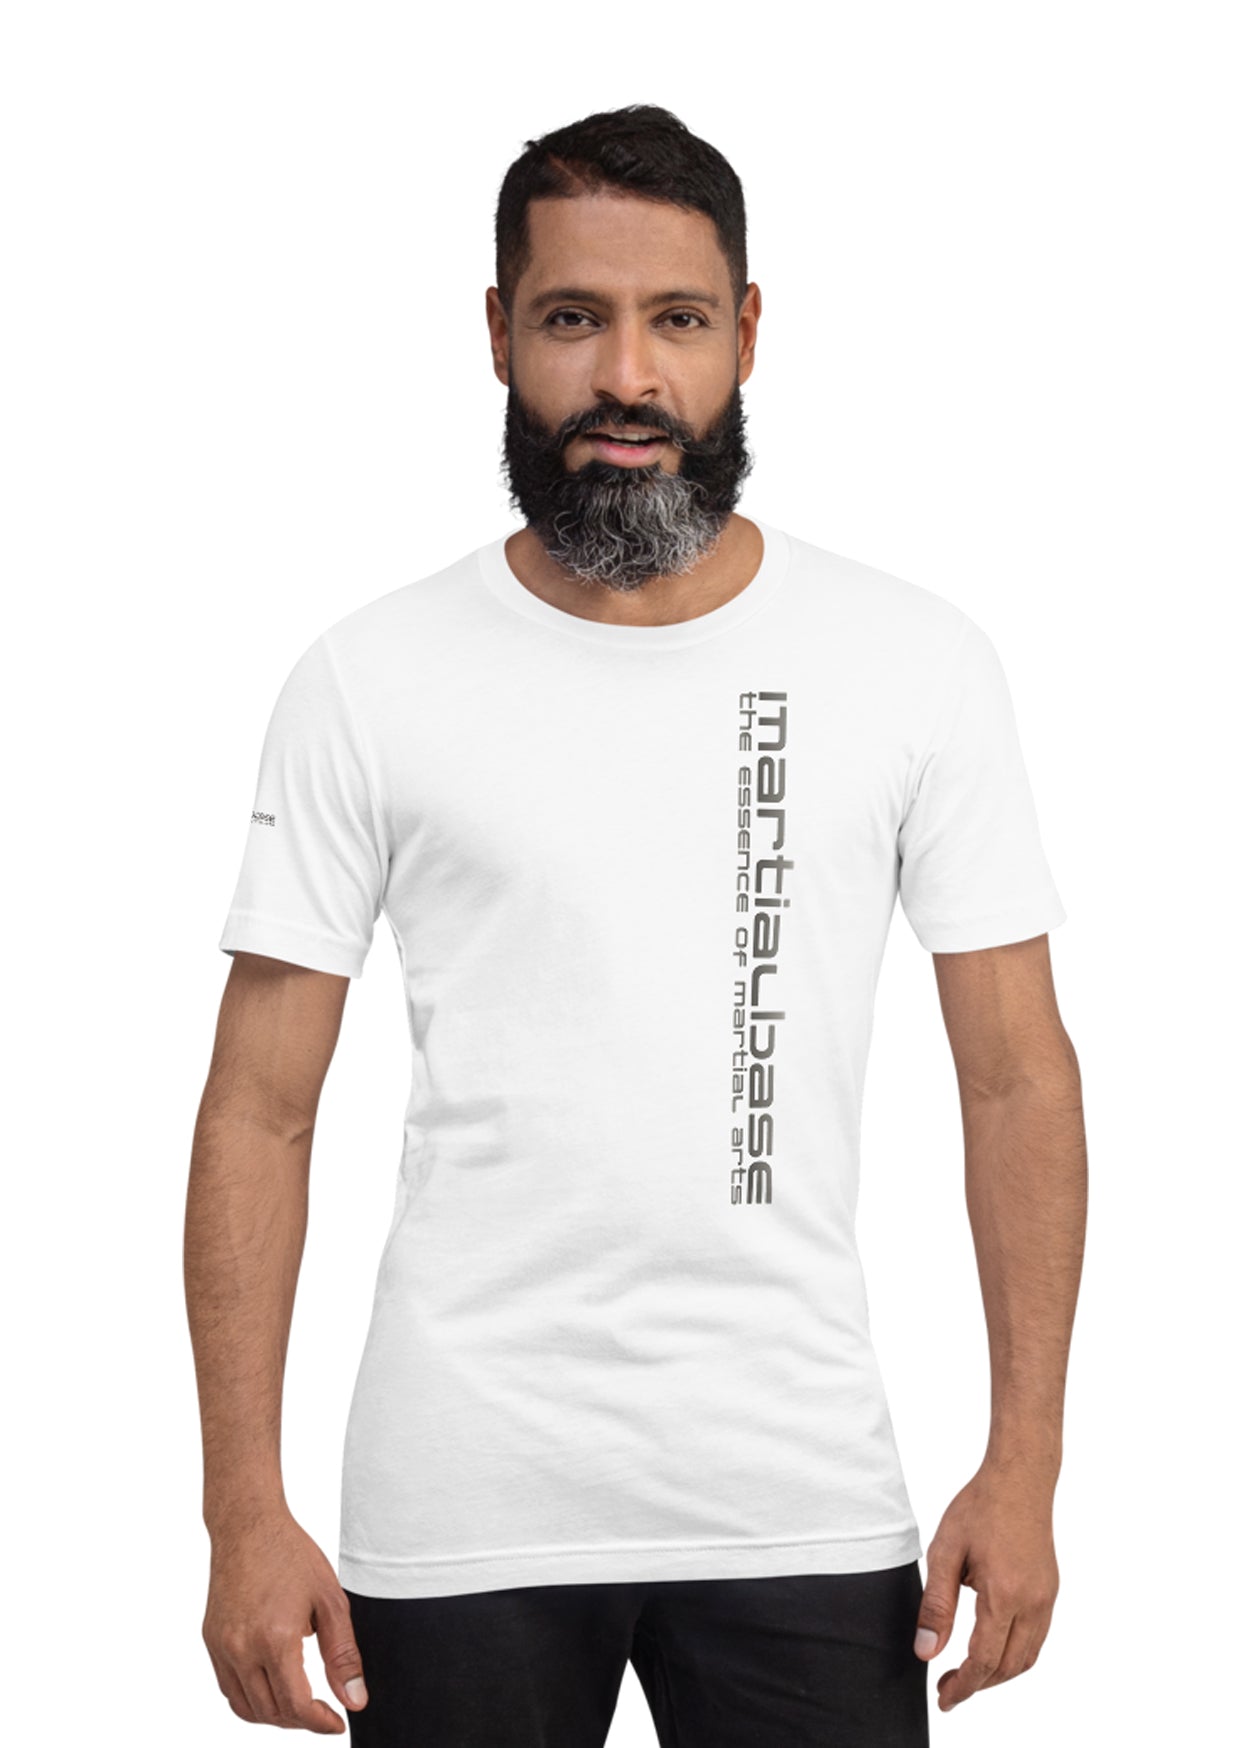 martialbase T-shirt | Shamrai